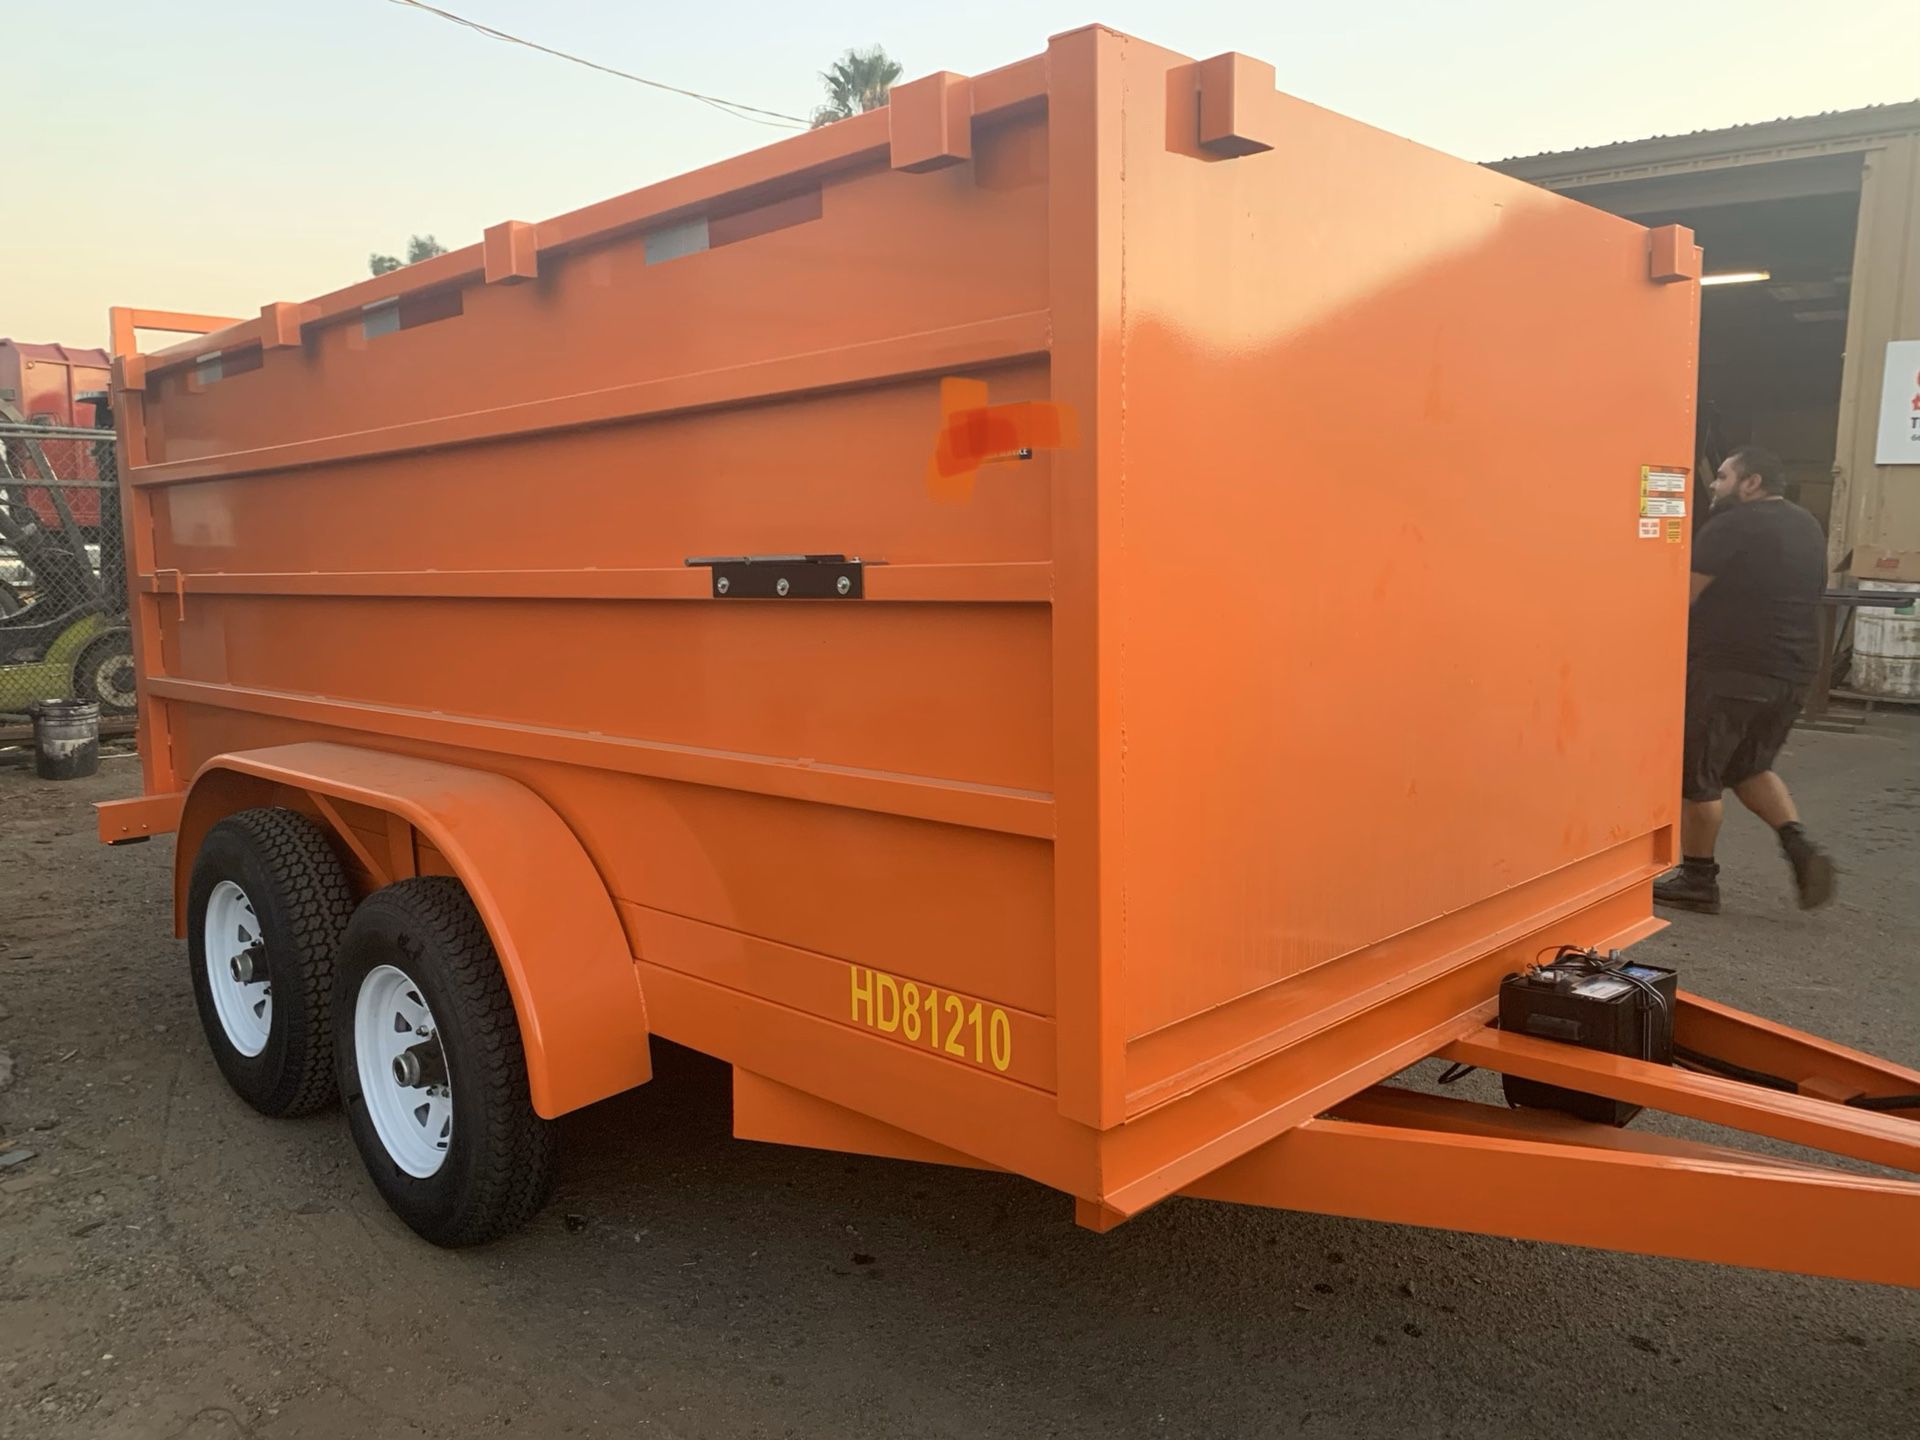 New Dump trailer 8x12x4 12000lb gvw $5250 cash